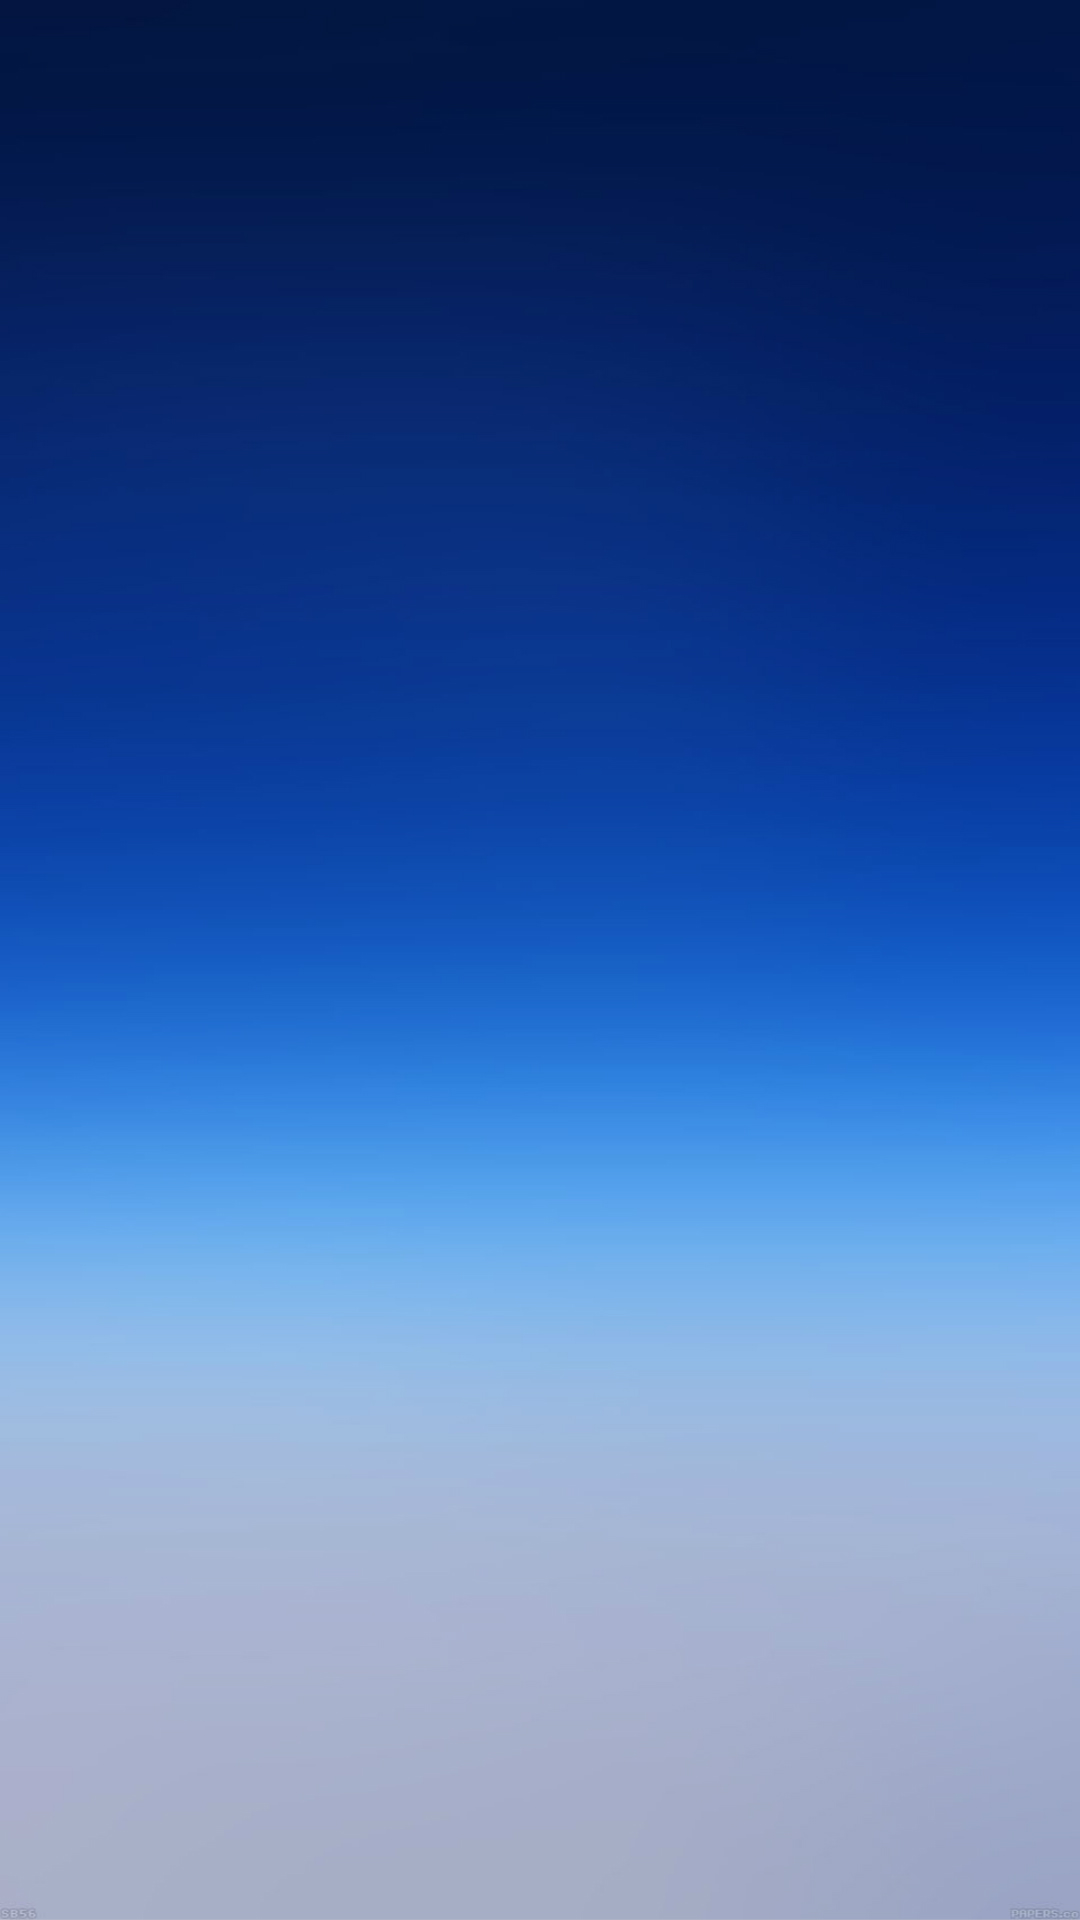 fond d'écran bleu iphone 6,ciel,bleu,jour,atmosphère,bleu cobalt